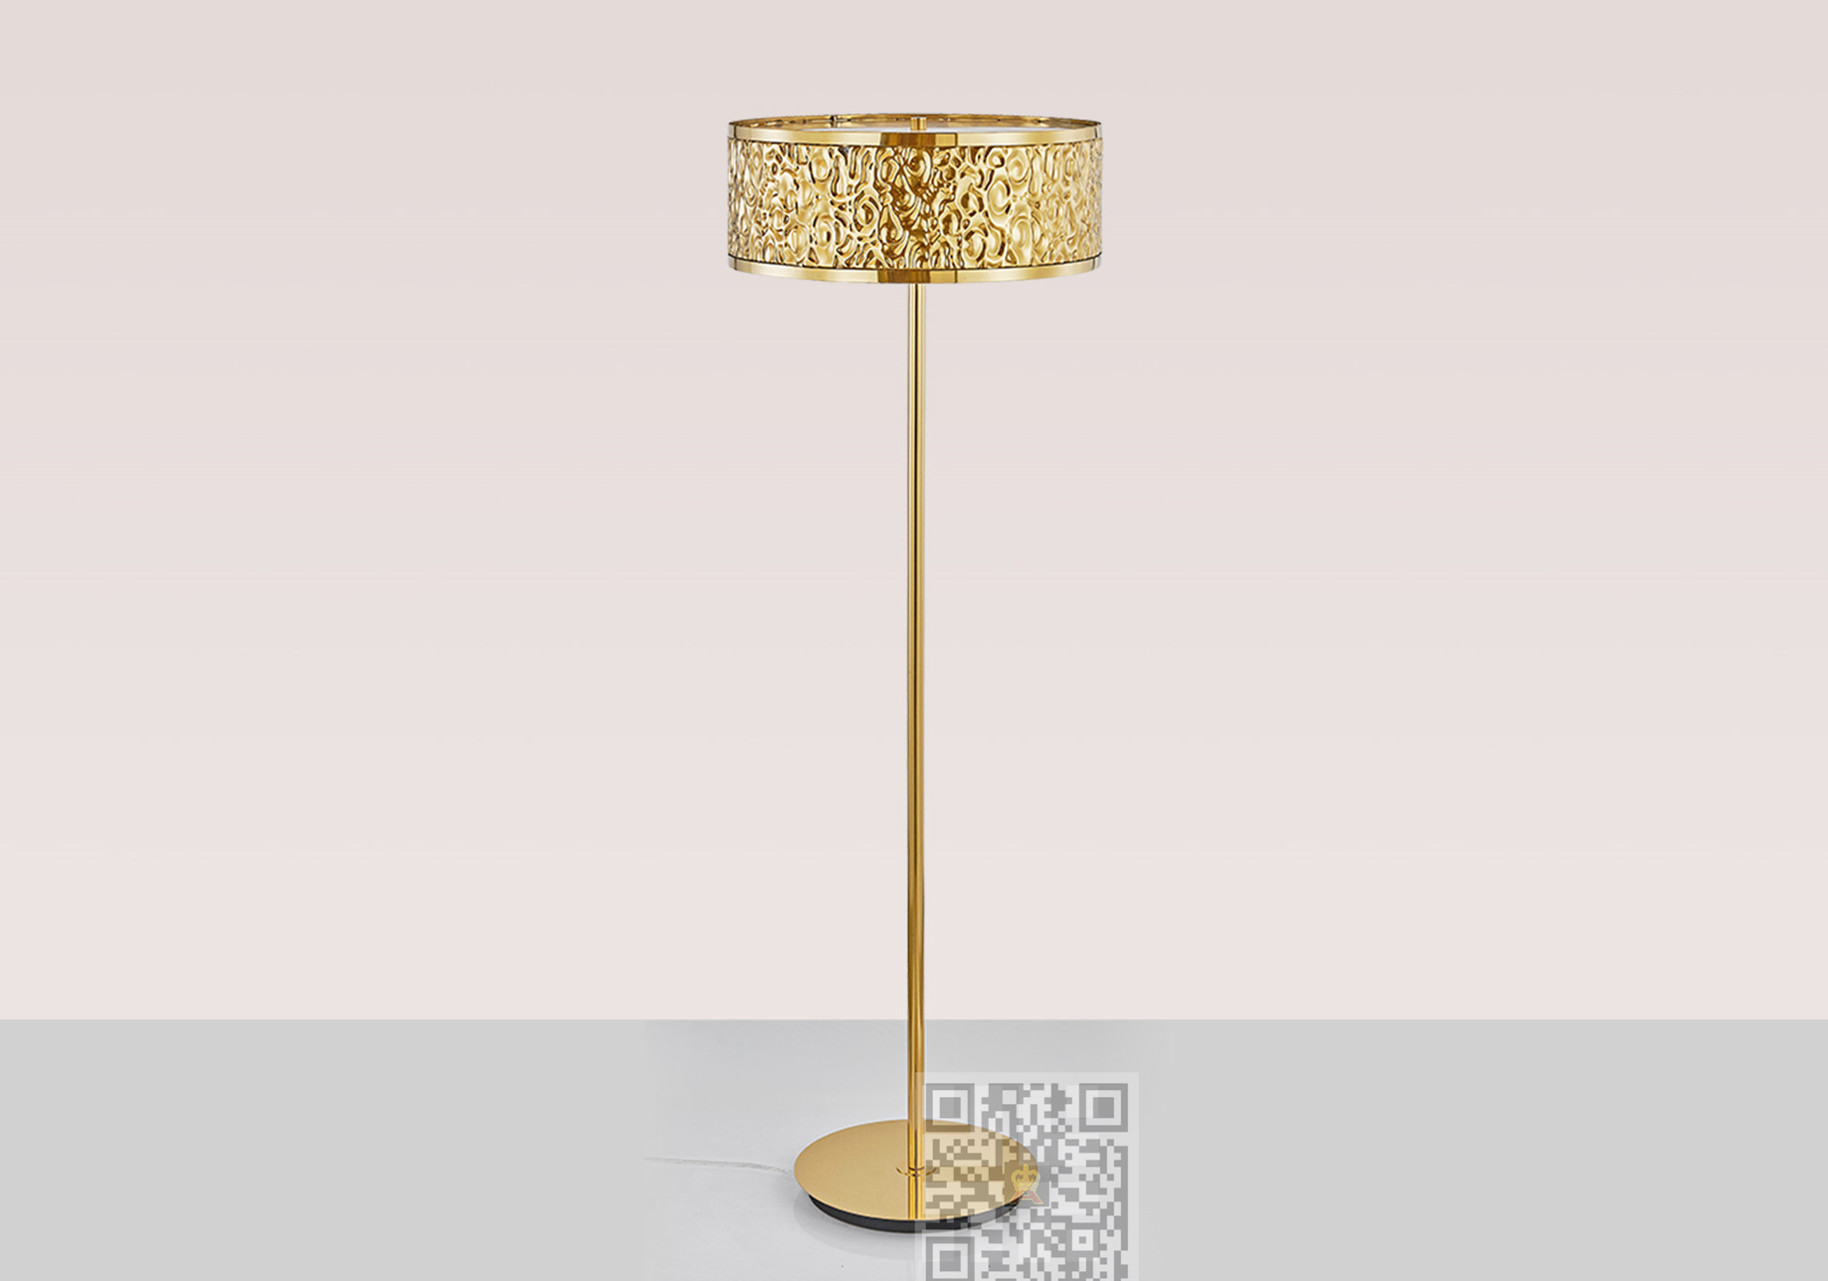 Indoor Gold Stainless Steel Table Lamp Lighting (KA00161T-1)